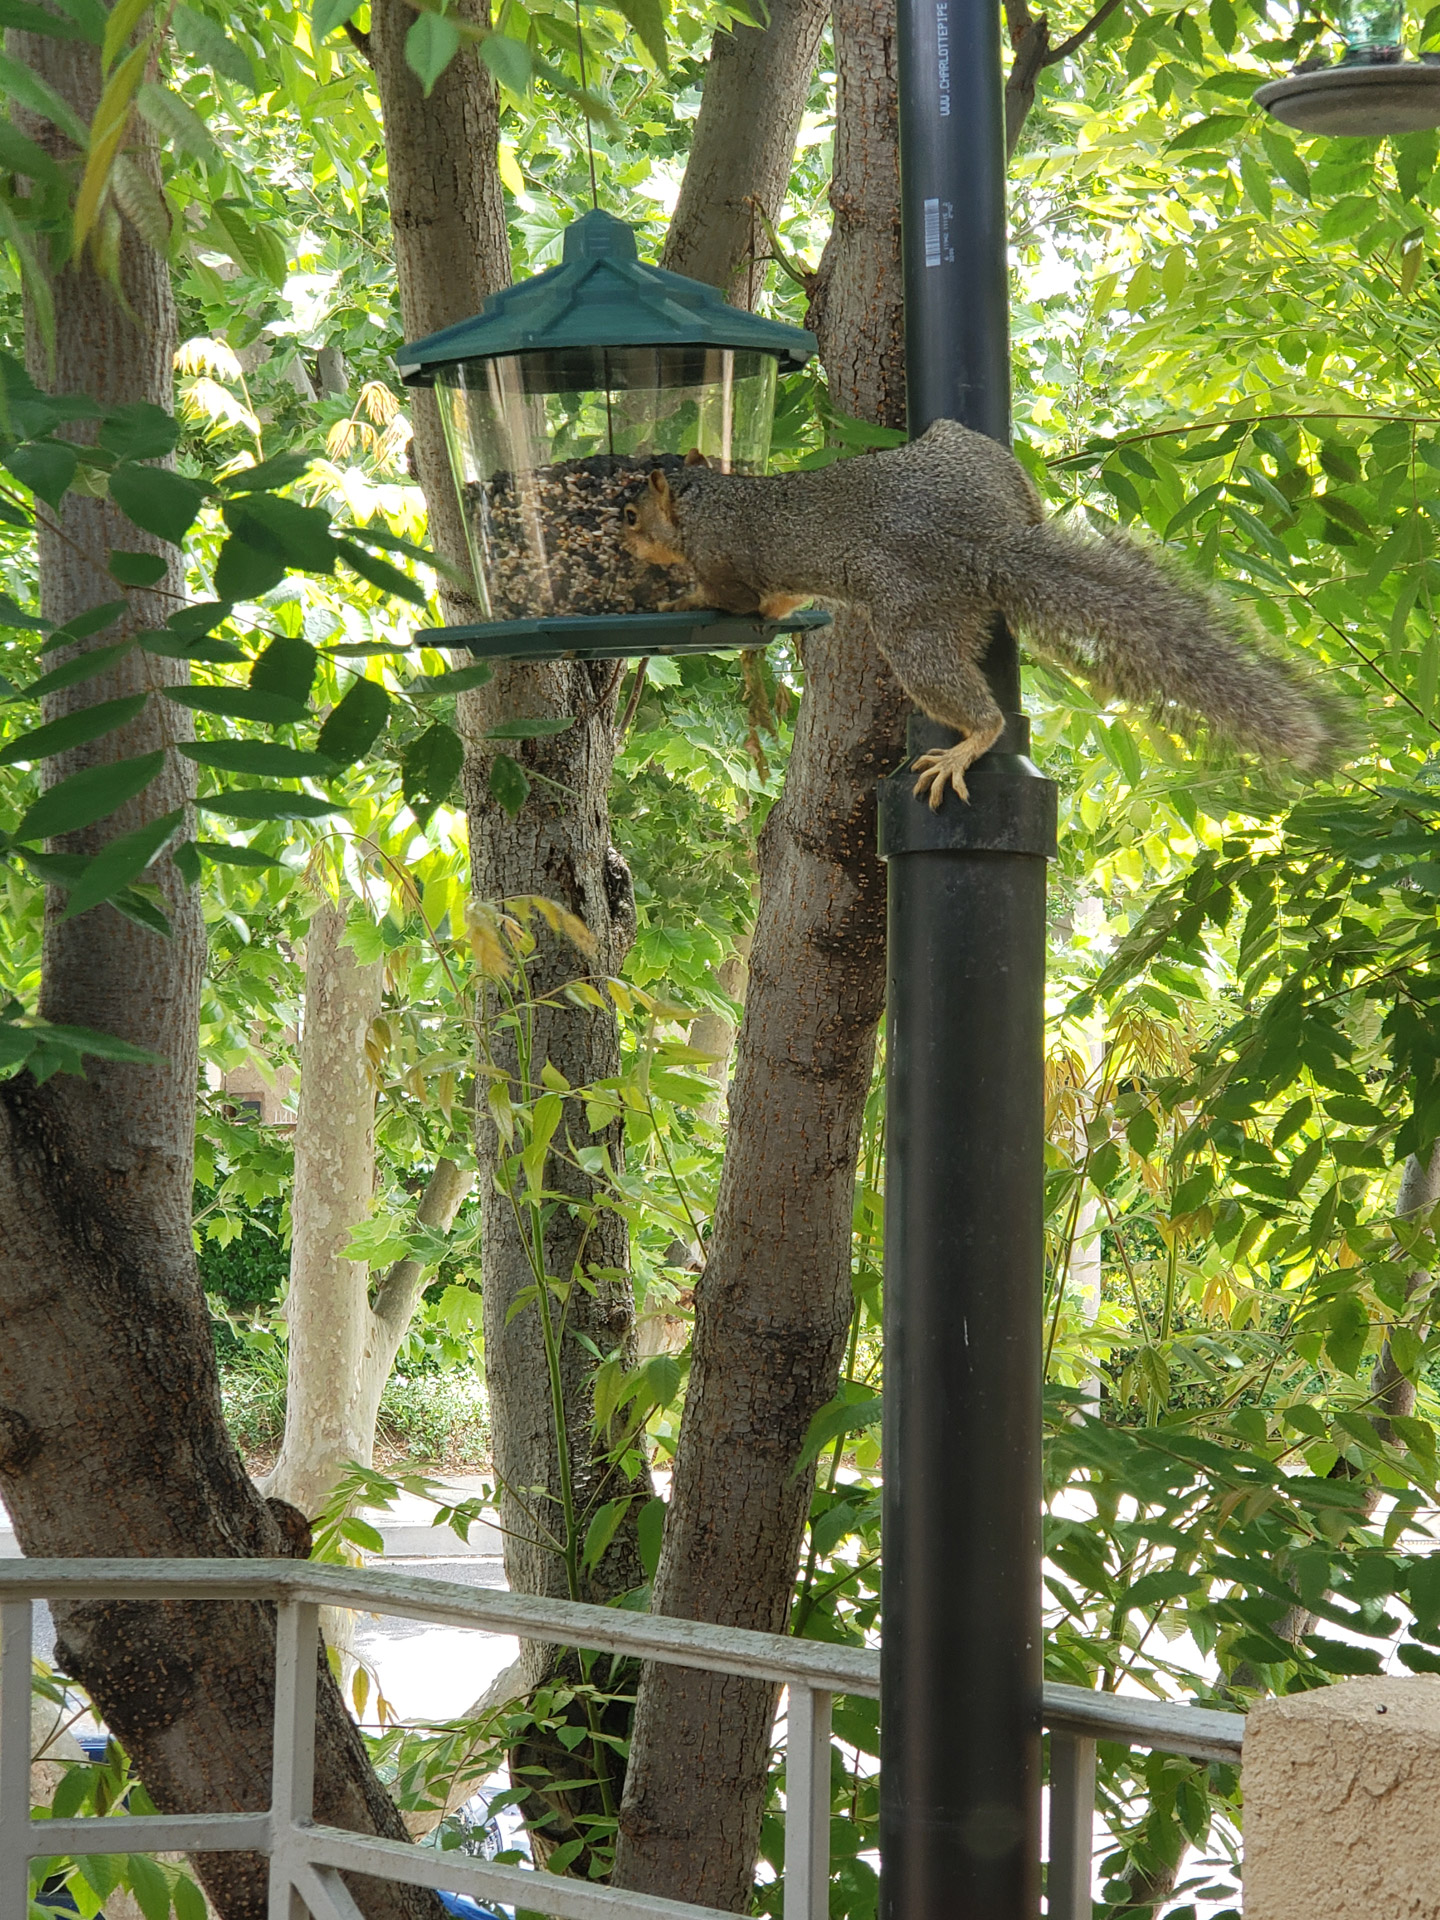 Fox squirrel eating out of a bird feeder